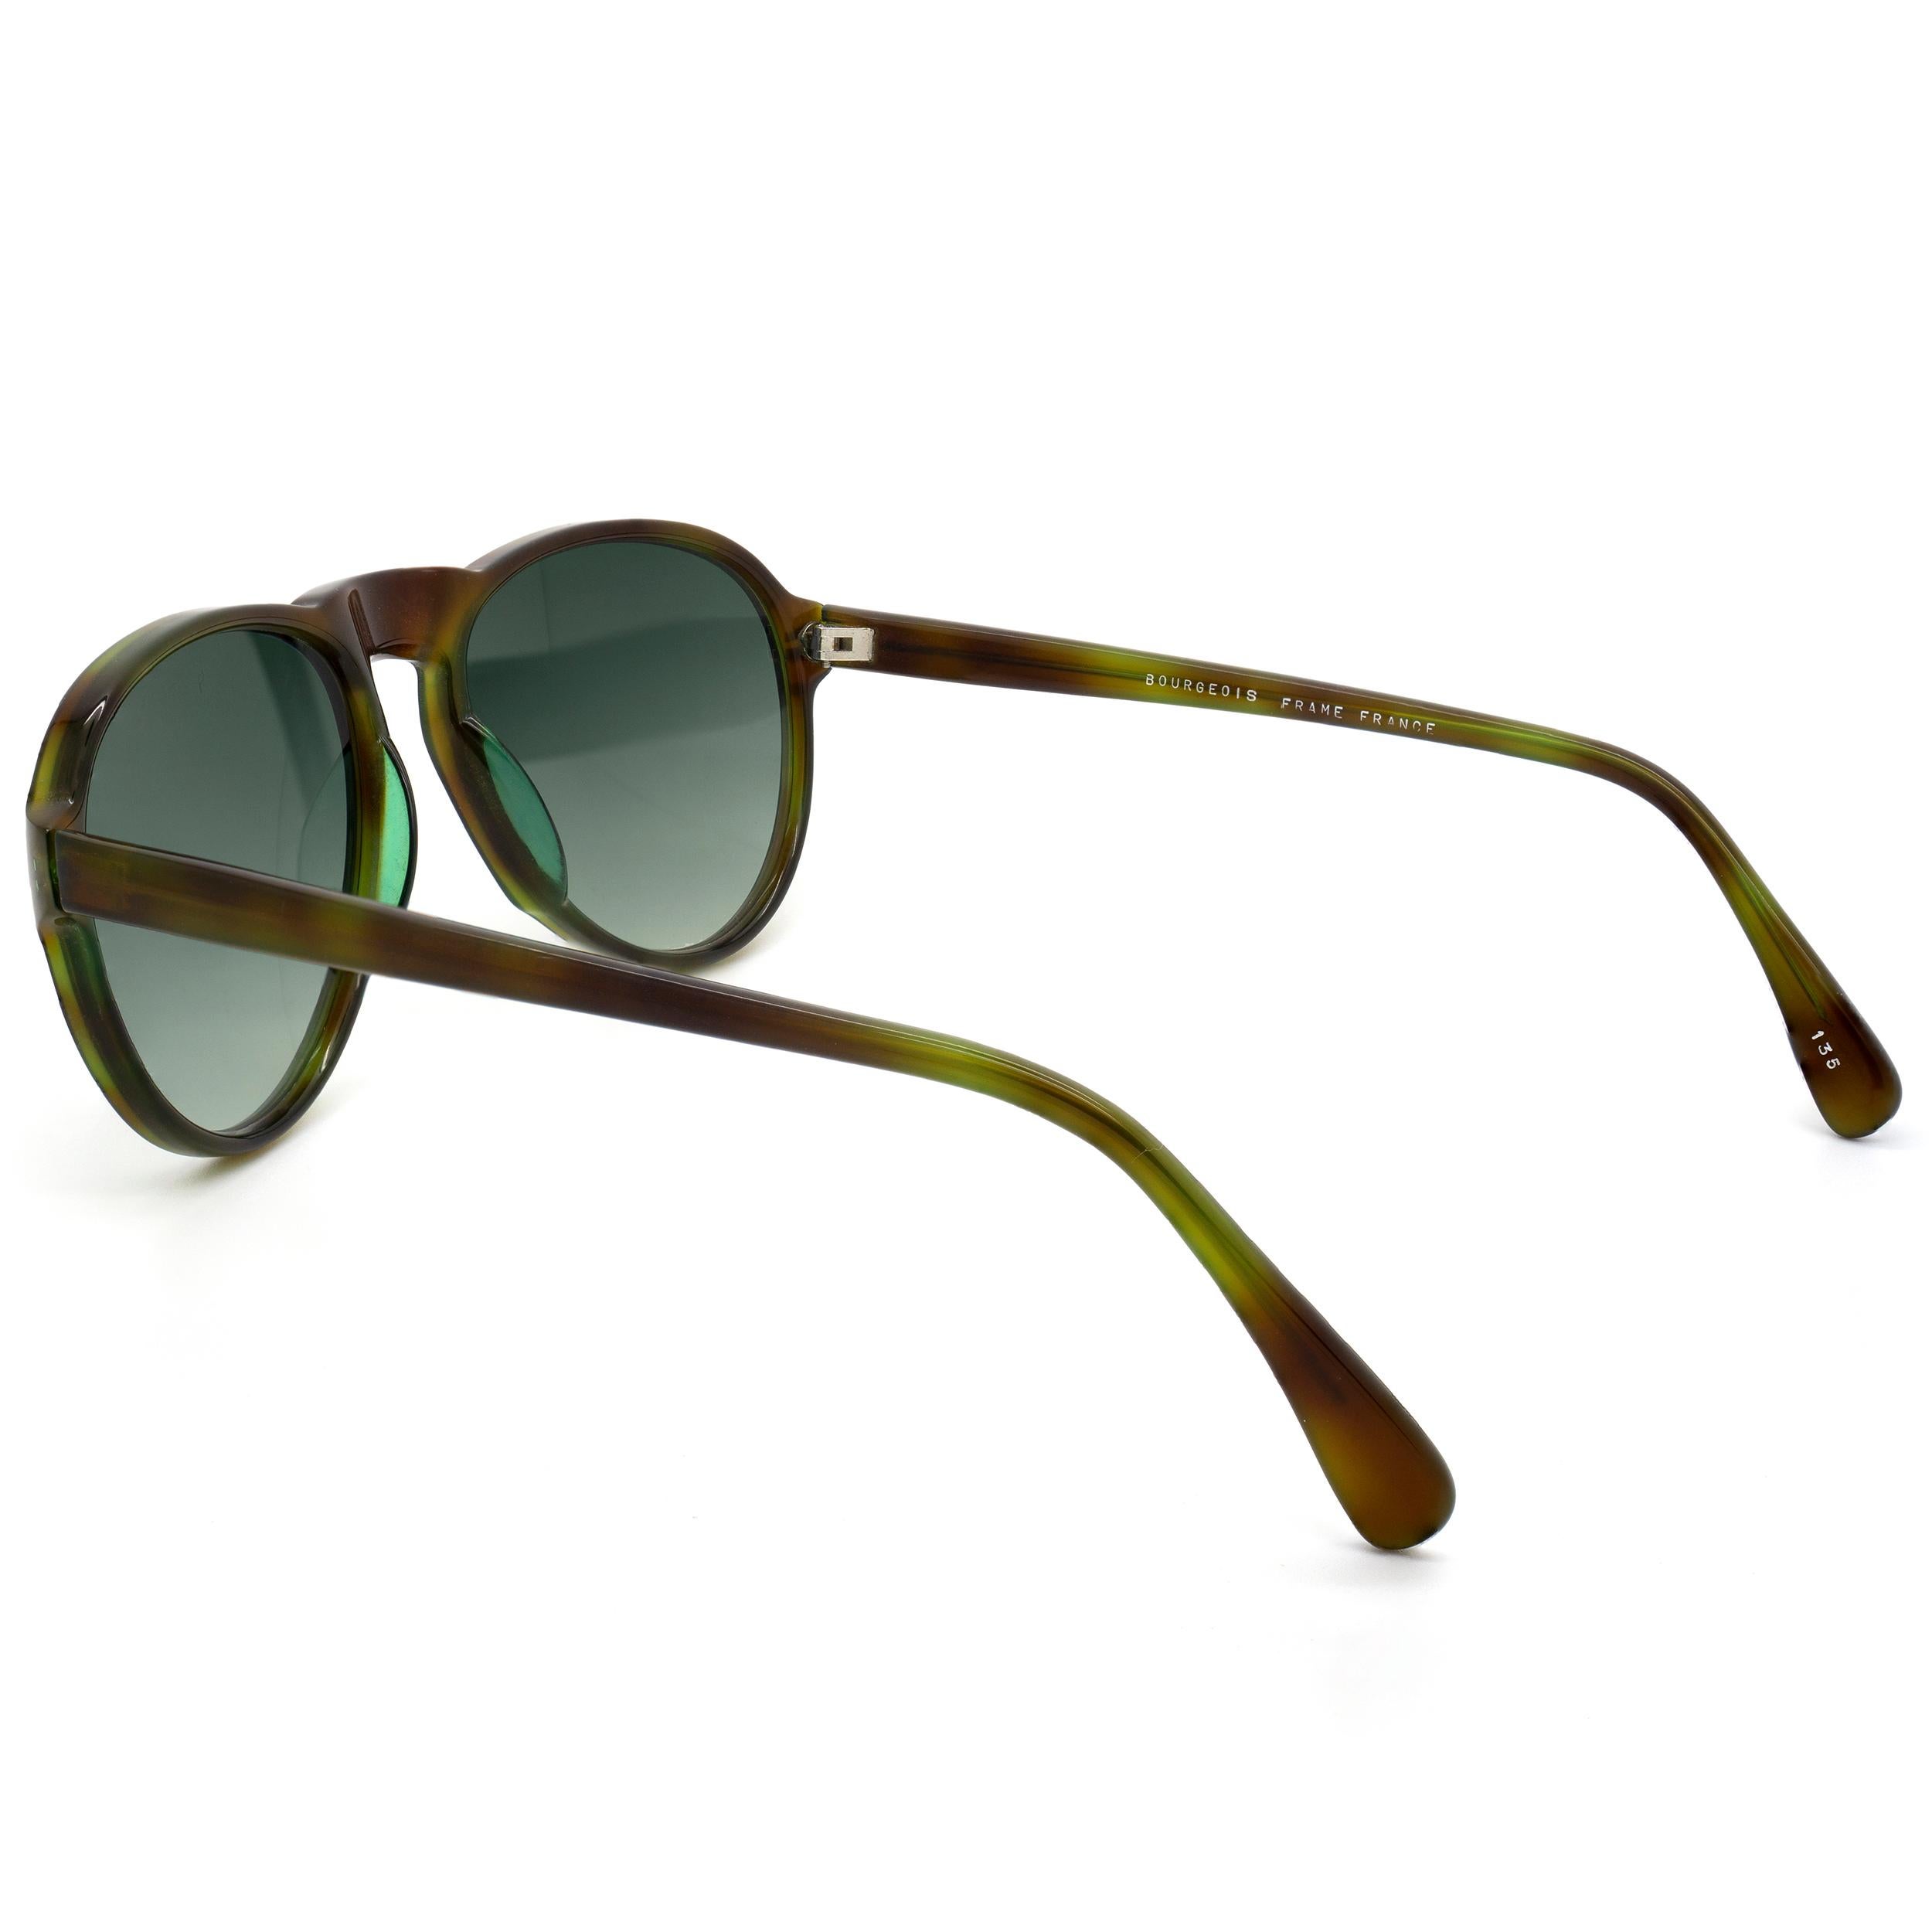 Black Bourgeois sunglasses green pilot, FRANCE For Sale